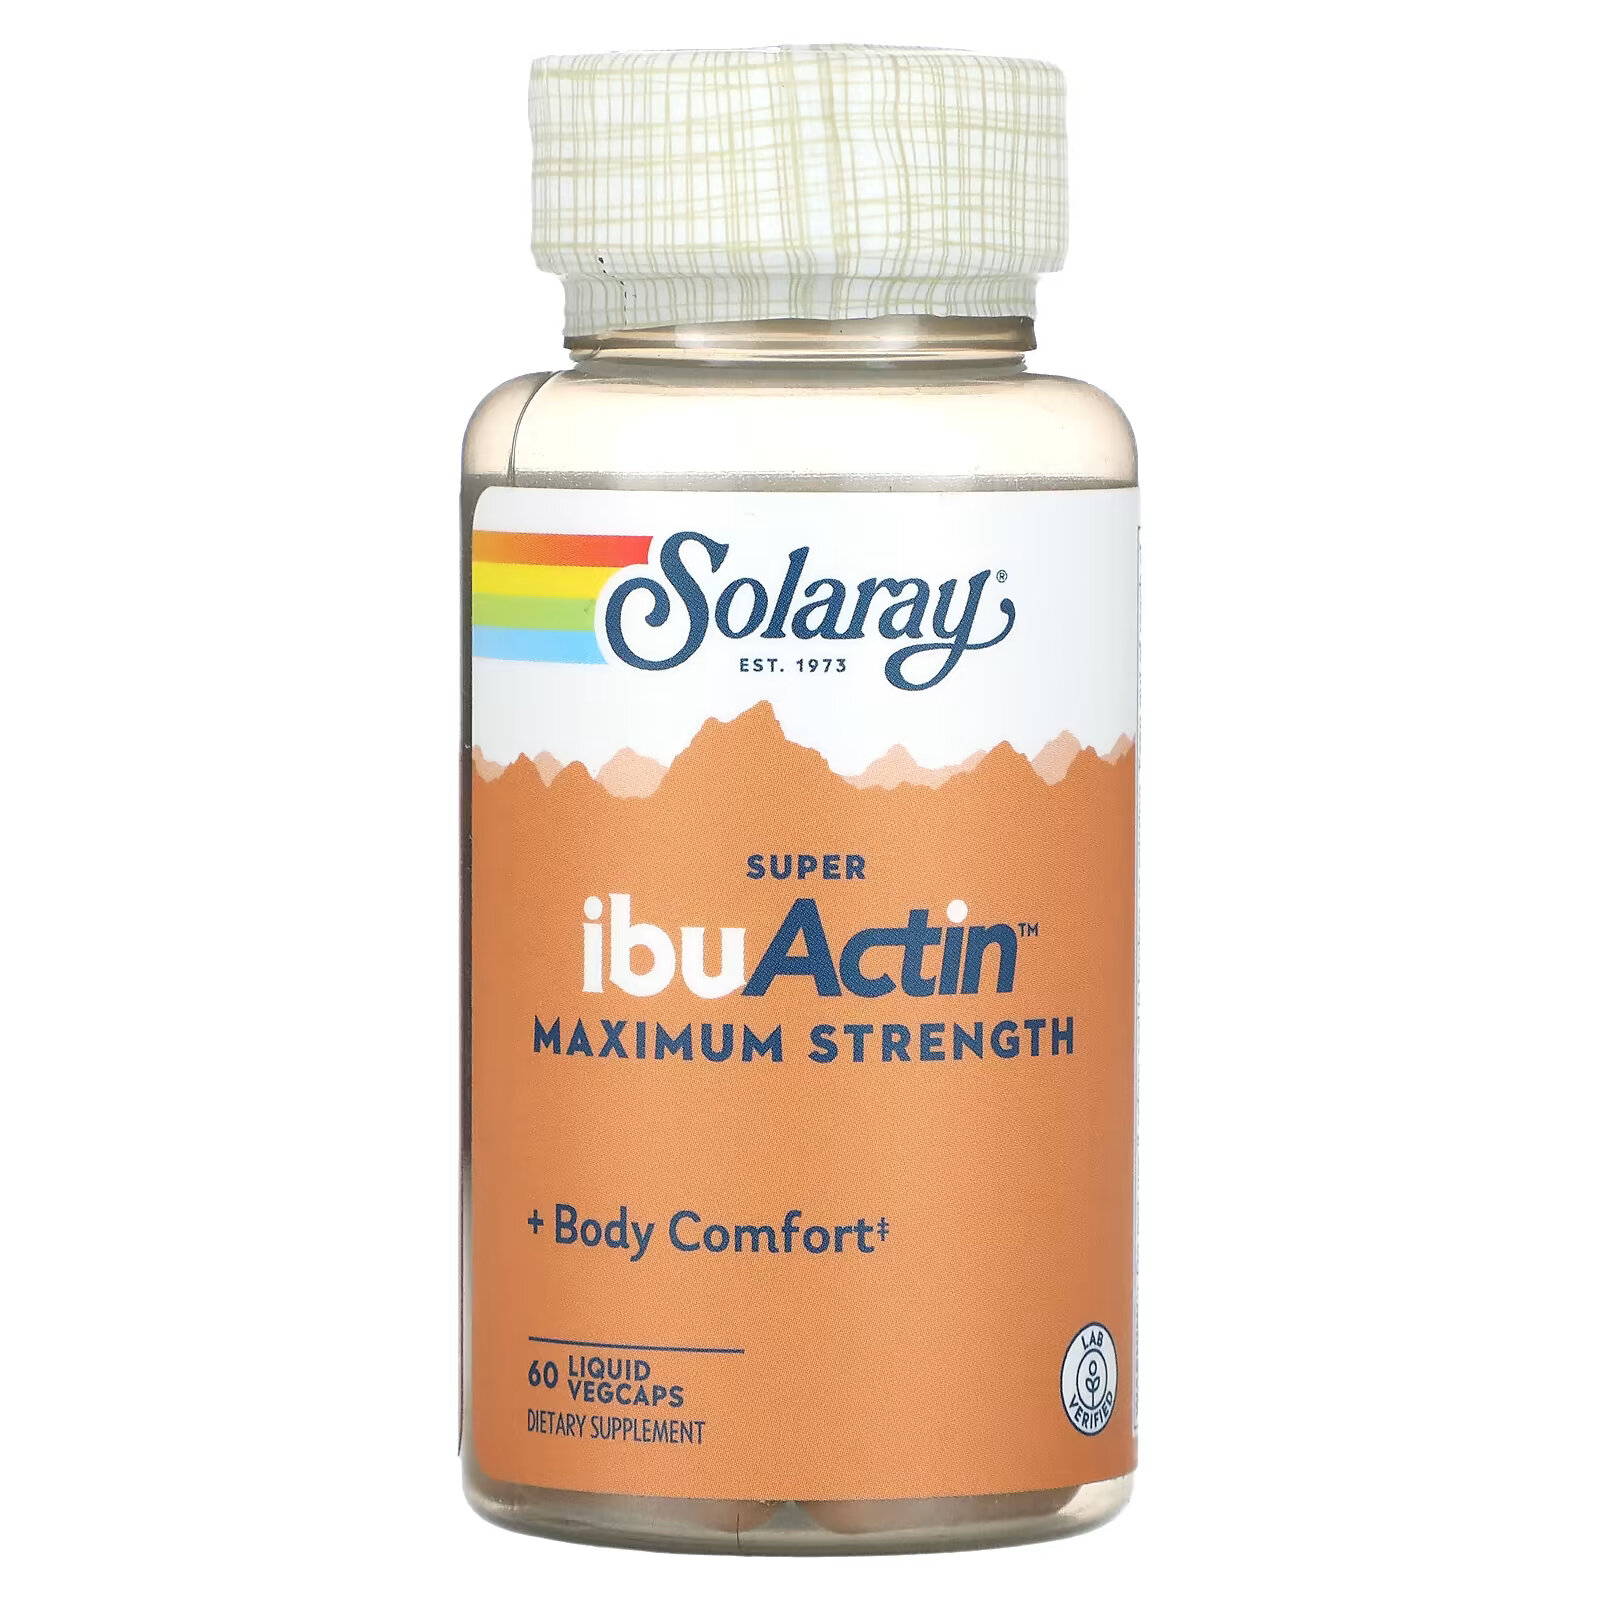 solaray joint inflashield с ibuactin 120 растительных капсул Solaray, Super IbuActin, максимальная эффективность, 60 растительных капсул